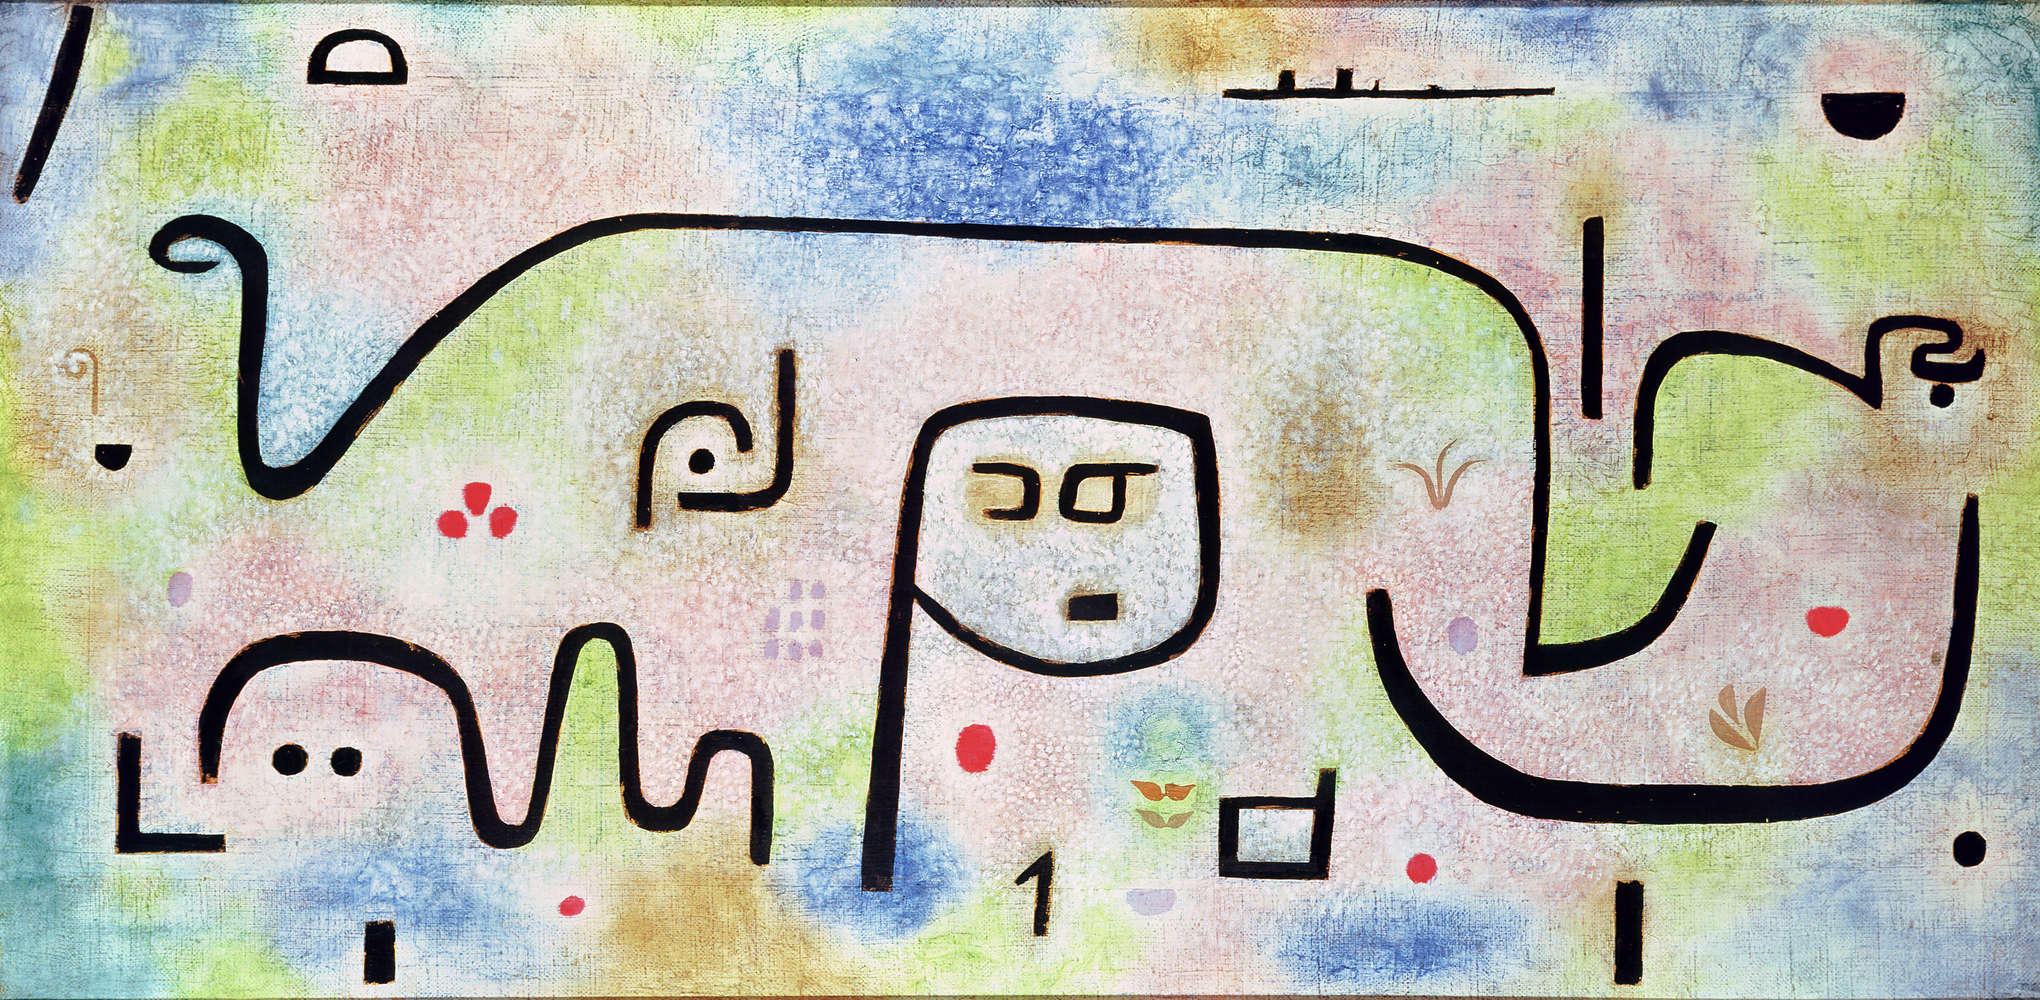             Papier peint panoramique "Insula Dulcamara" de Paul Klee
        